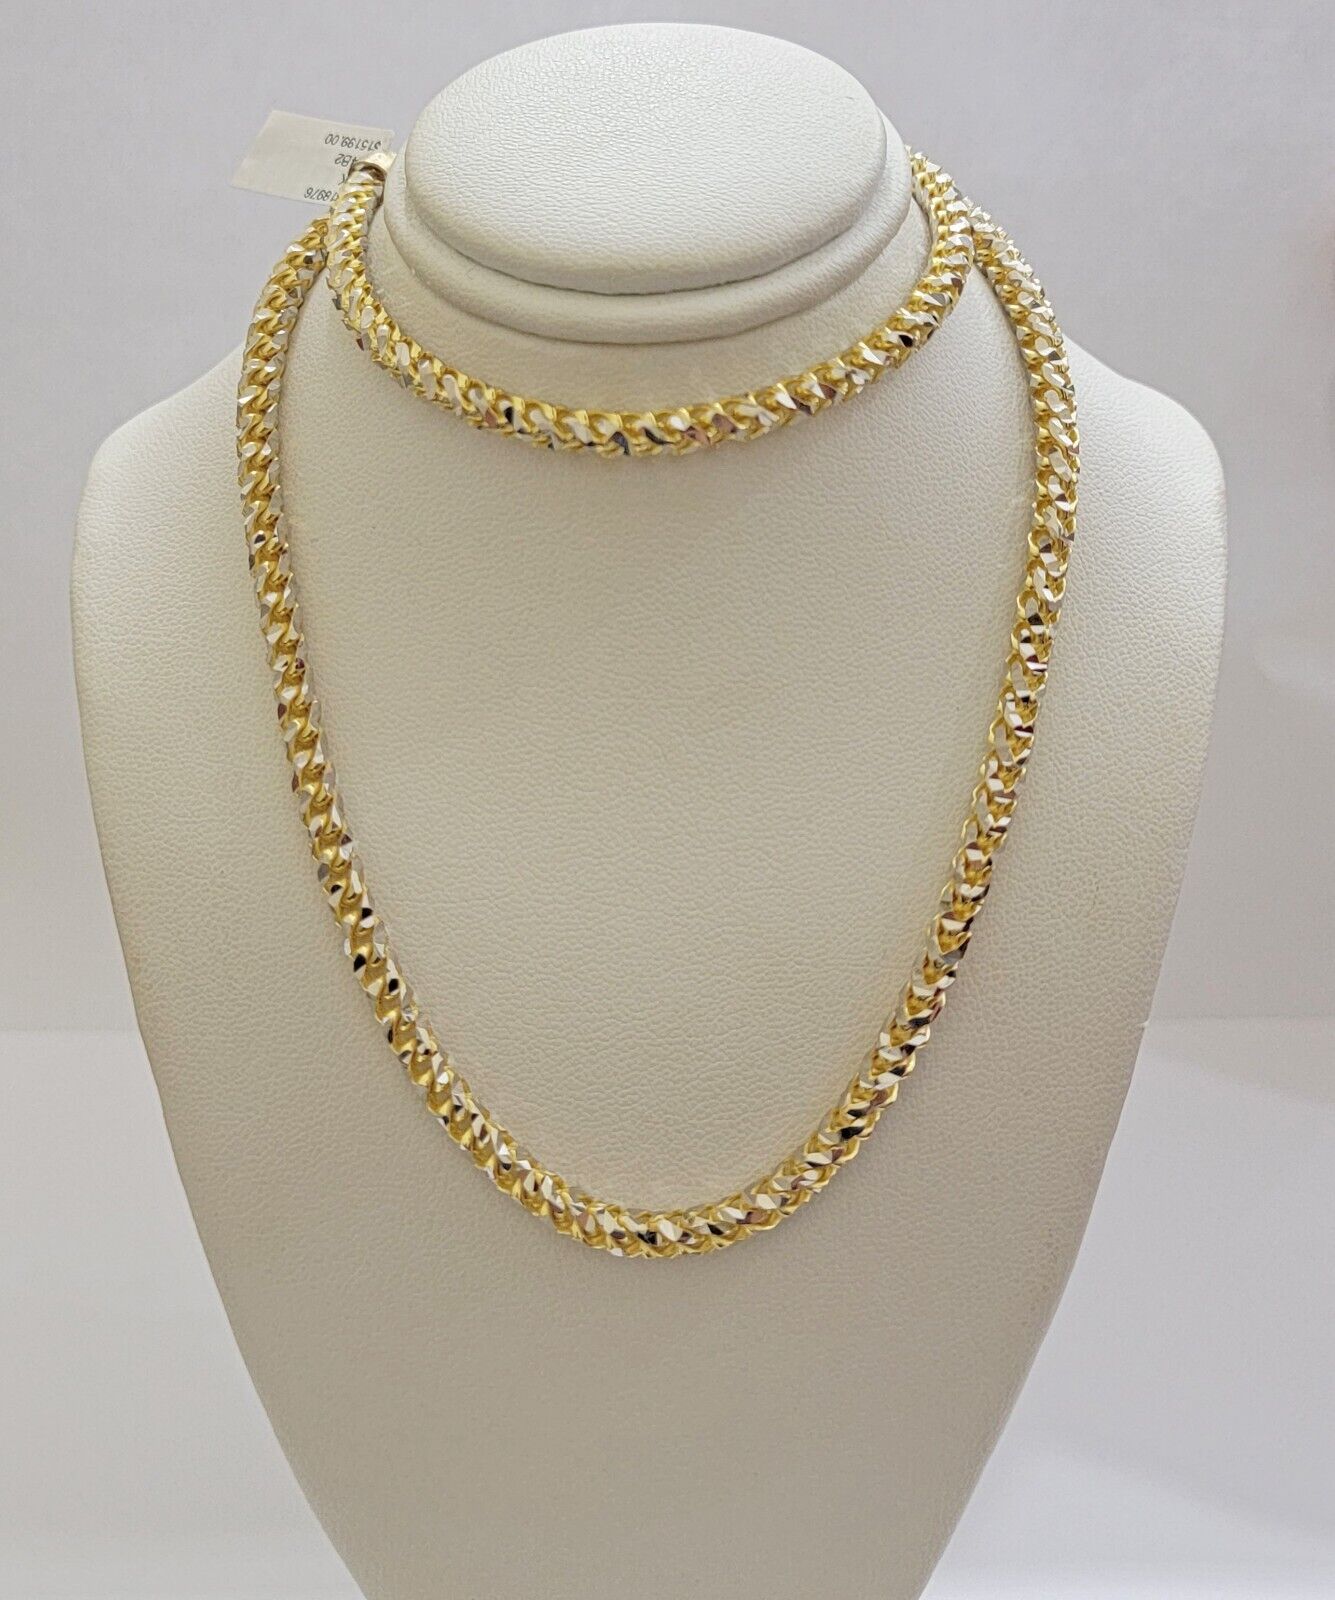 Real 10k Gold Solid Palm Chain Necklace Diamond cut 4.5mm 24" 10kt Unique Design